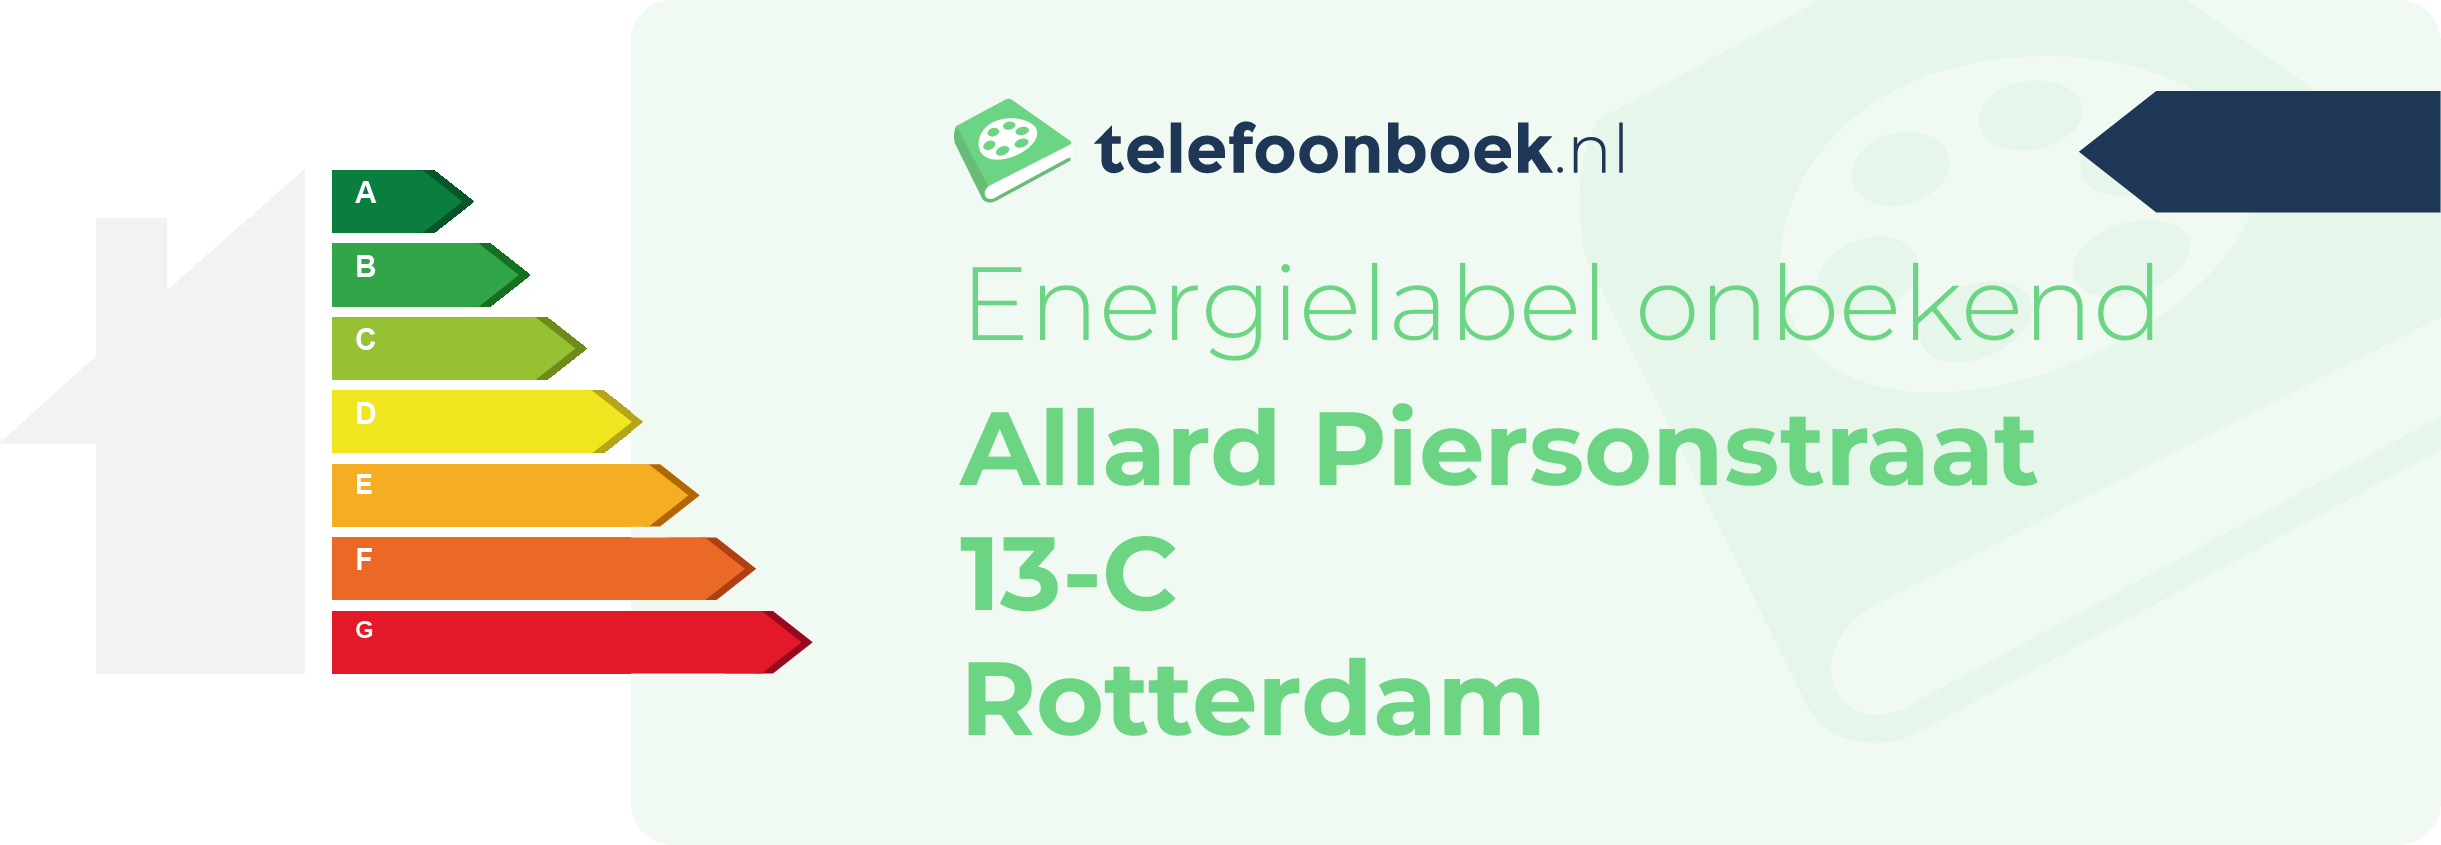 Energielabel Allard Piersonstraat 13-C Rotterdam